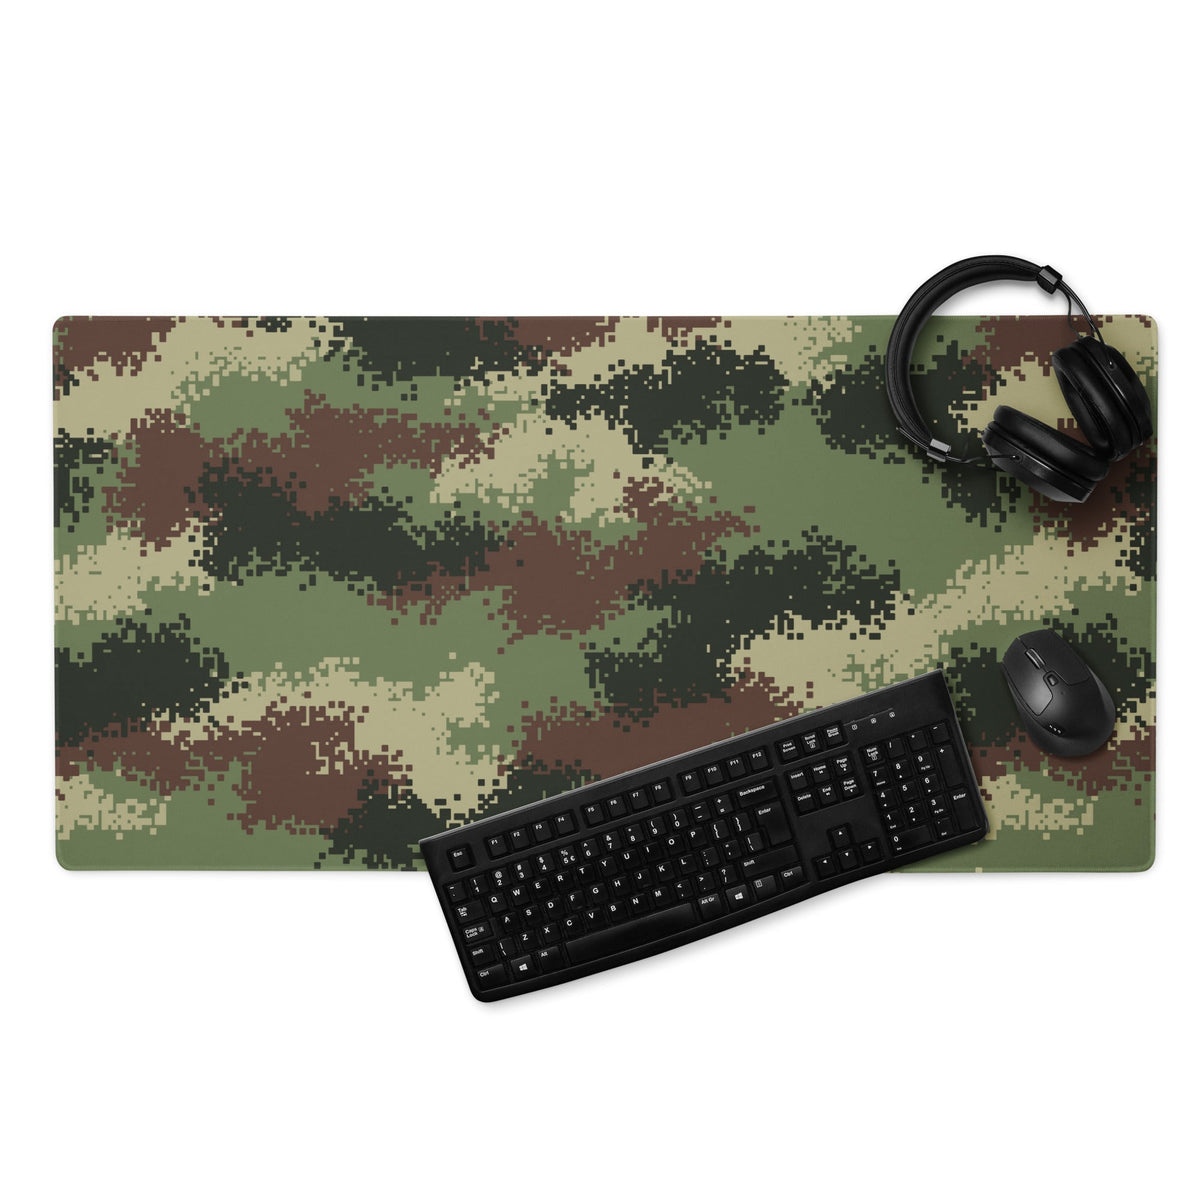 Columbian Camflado Pixelado Digital CAMO Gaming mouse pad - 36″×18″